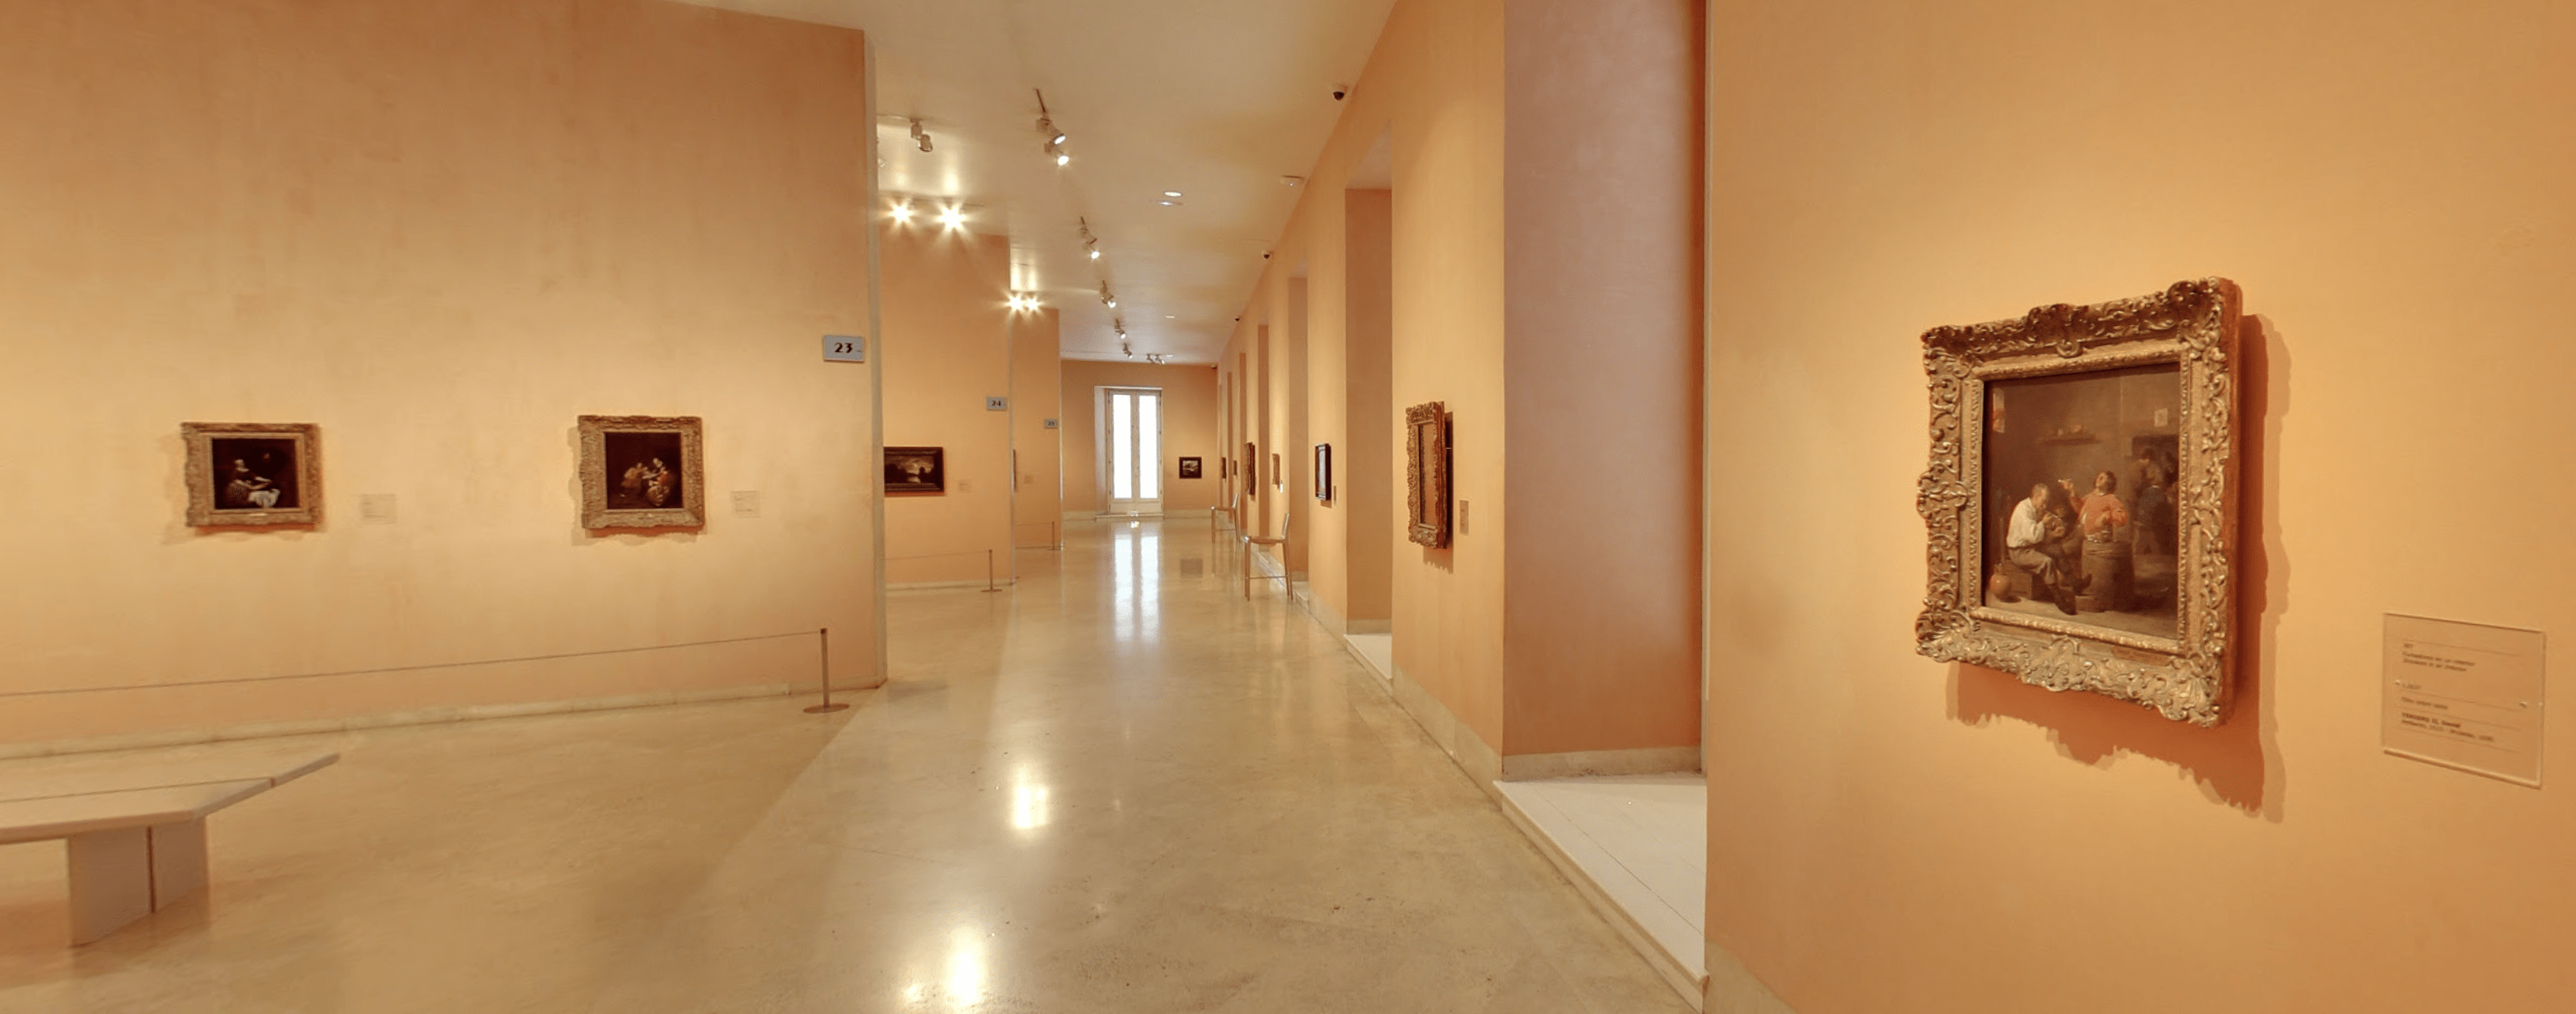 Inside Thyssen Museum in Madrid